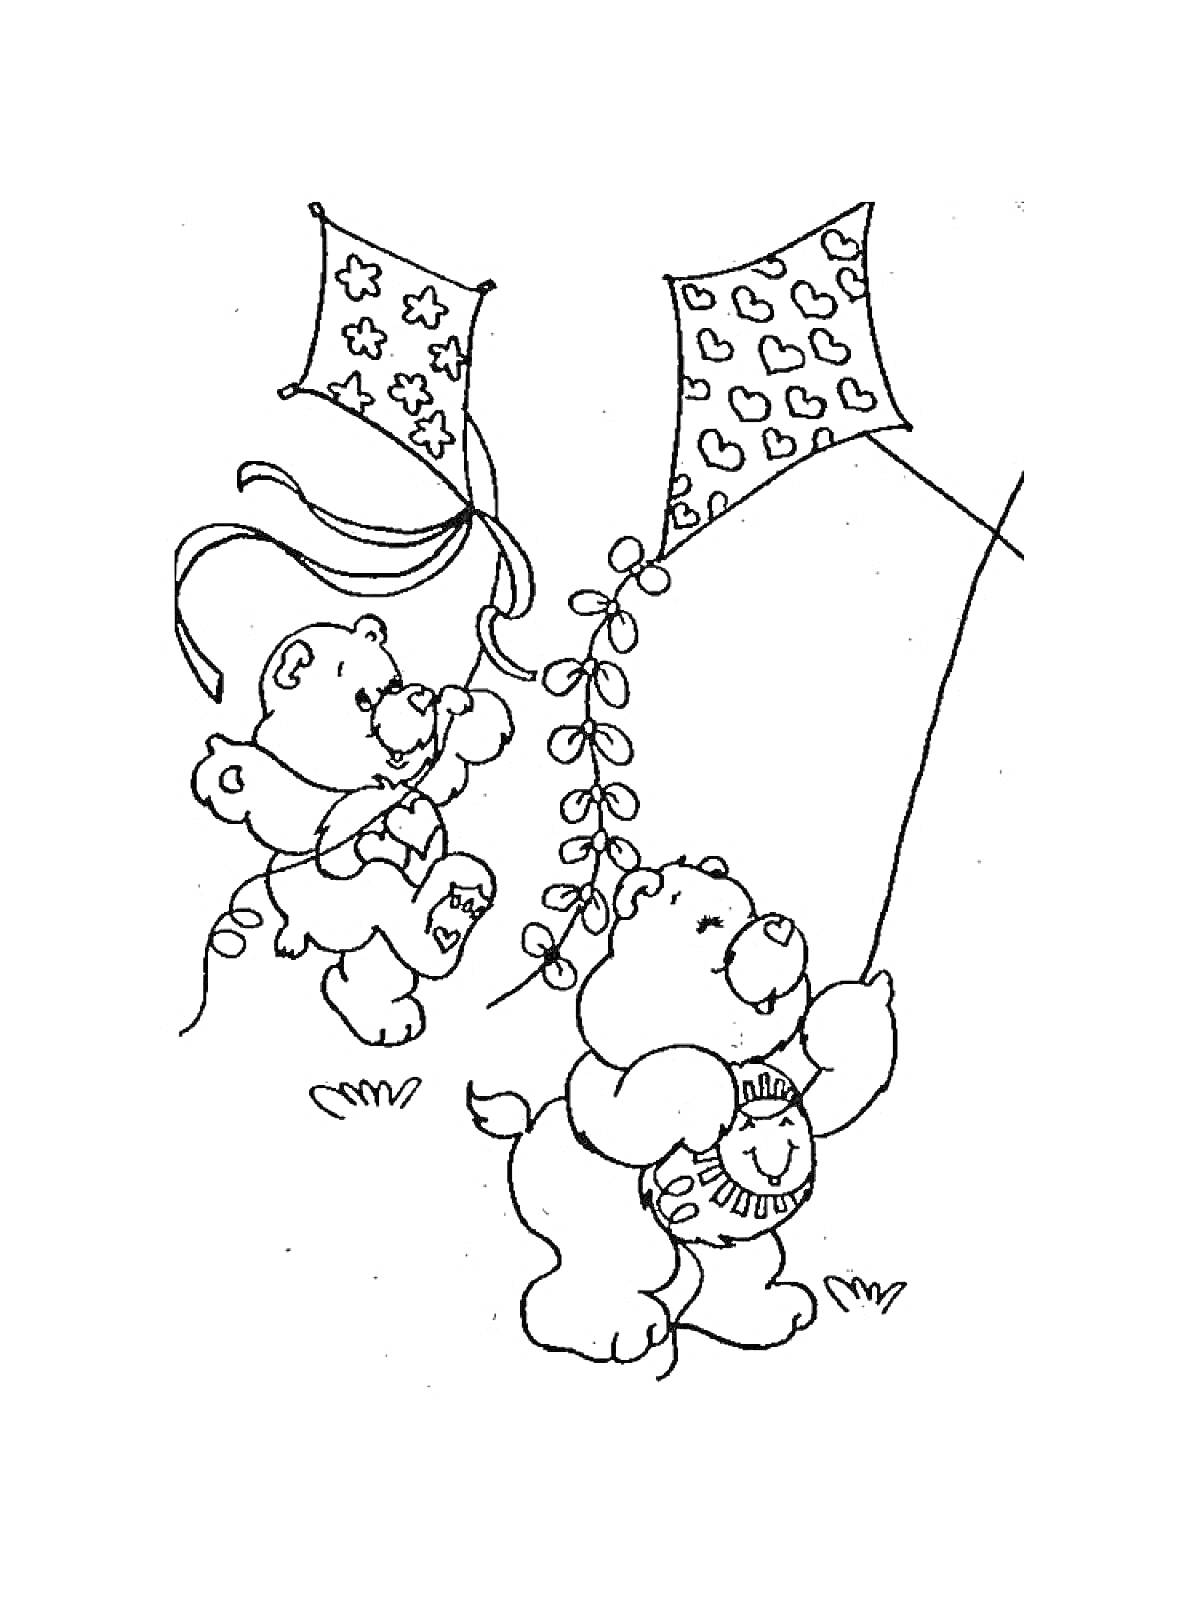 Раскраска Медвежата с воздушными змеями с узорами в форме звезд и сердечек